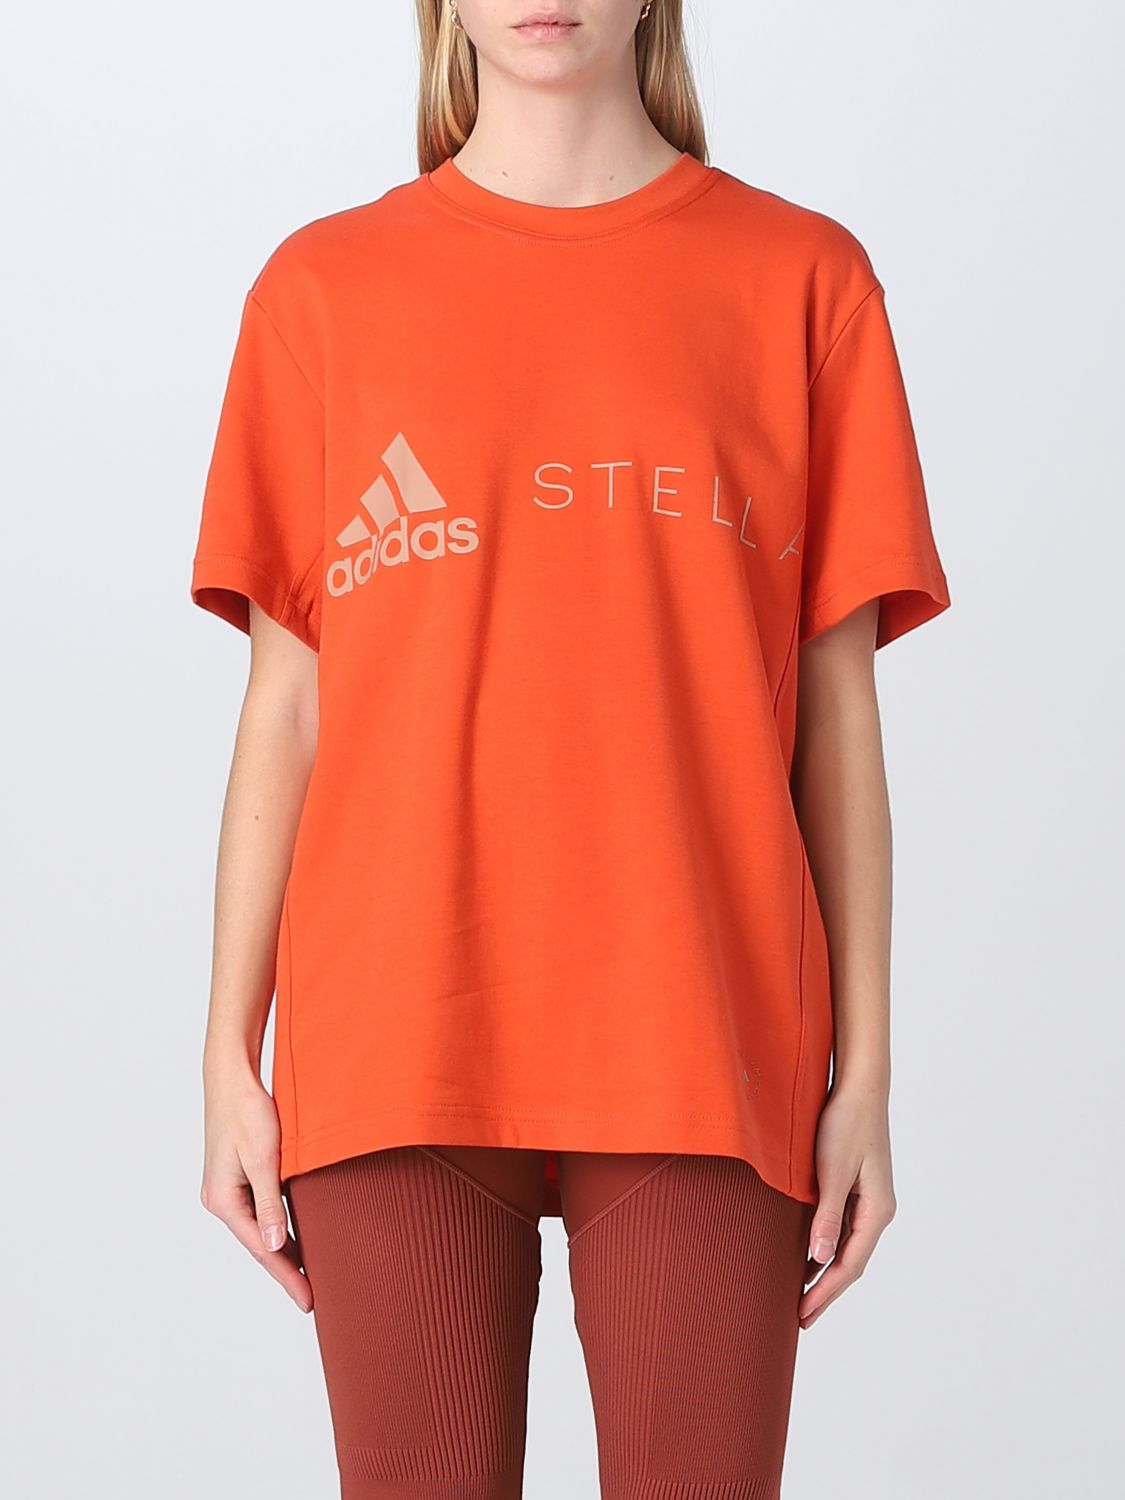 BY STELLA MCCARTNEY: Camiseta para mujer, | Camiseta Adidas By Stella Mccartney HR2221 en en GIGLIO.COM